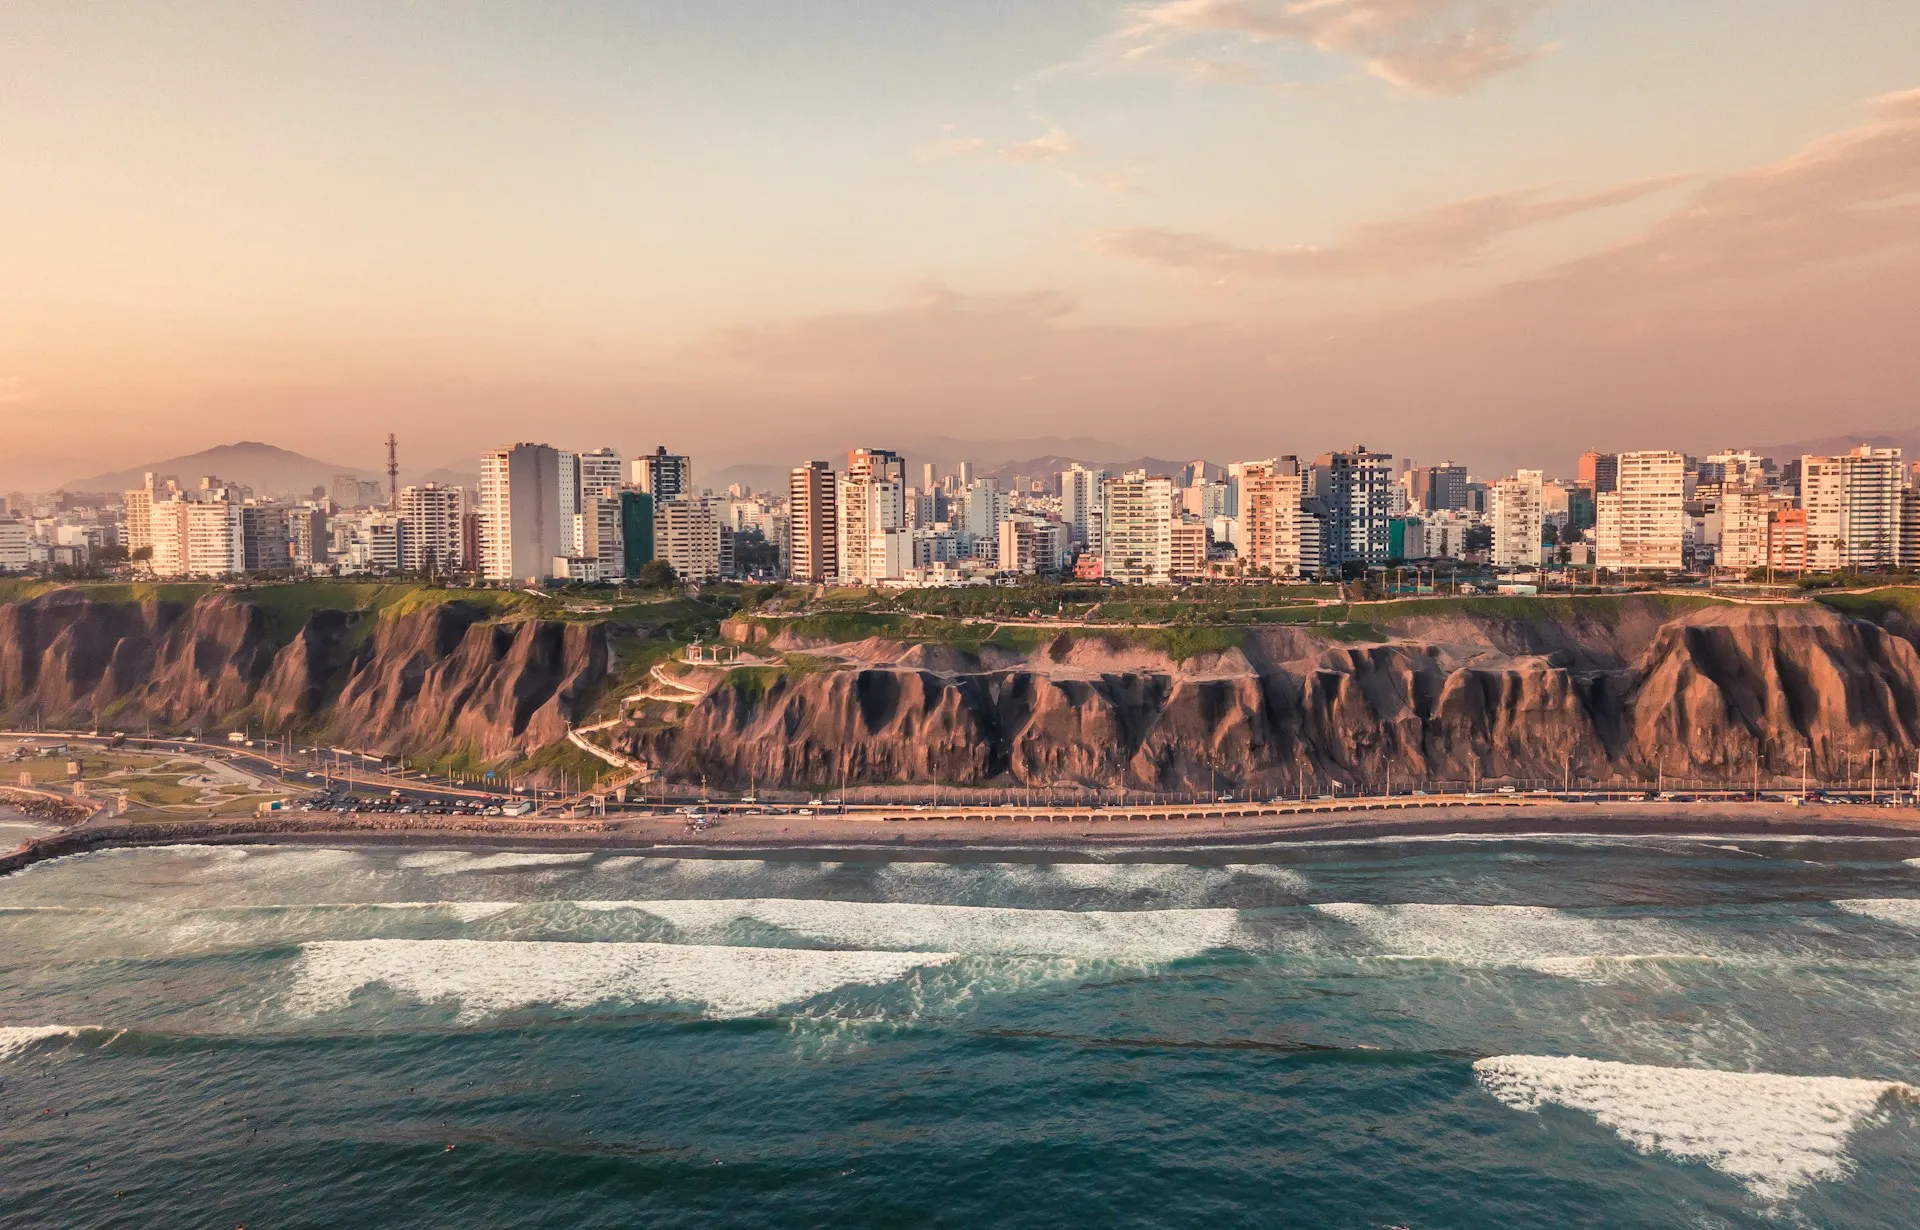 Coastline of Lima. Source: Photo by Willian Justen on Unsplash